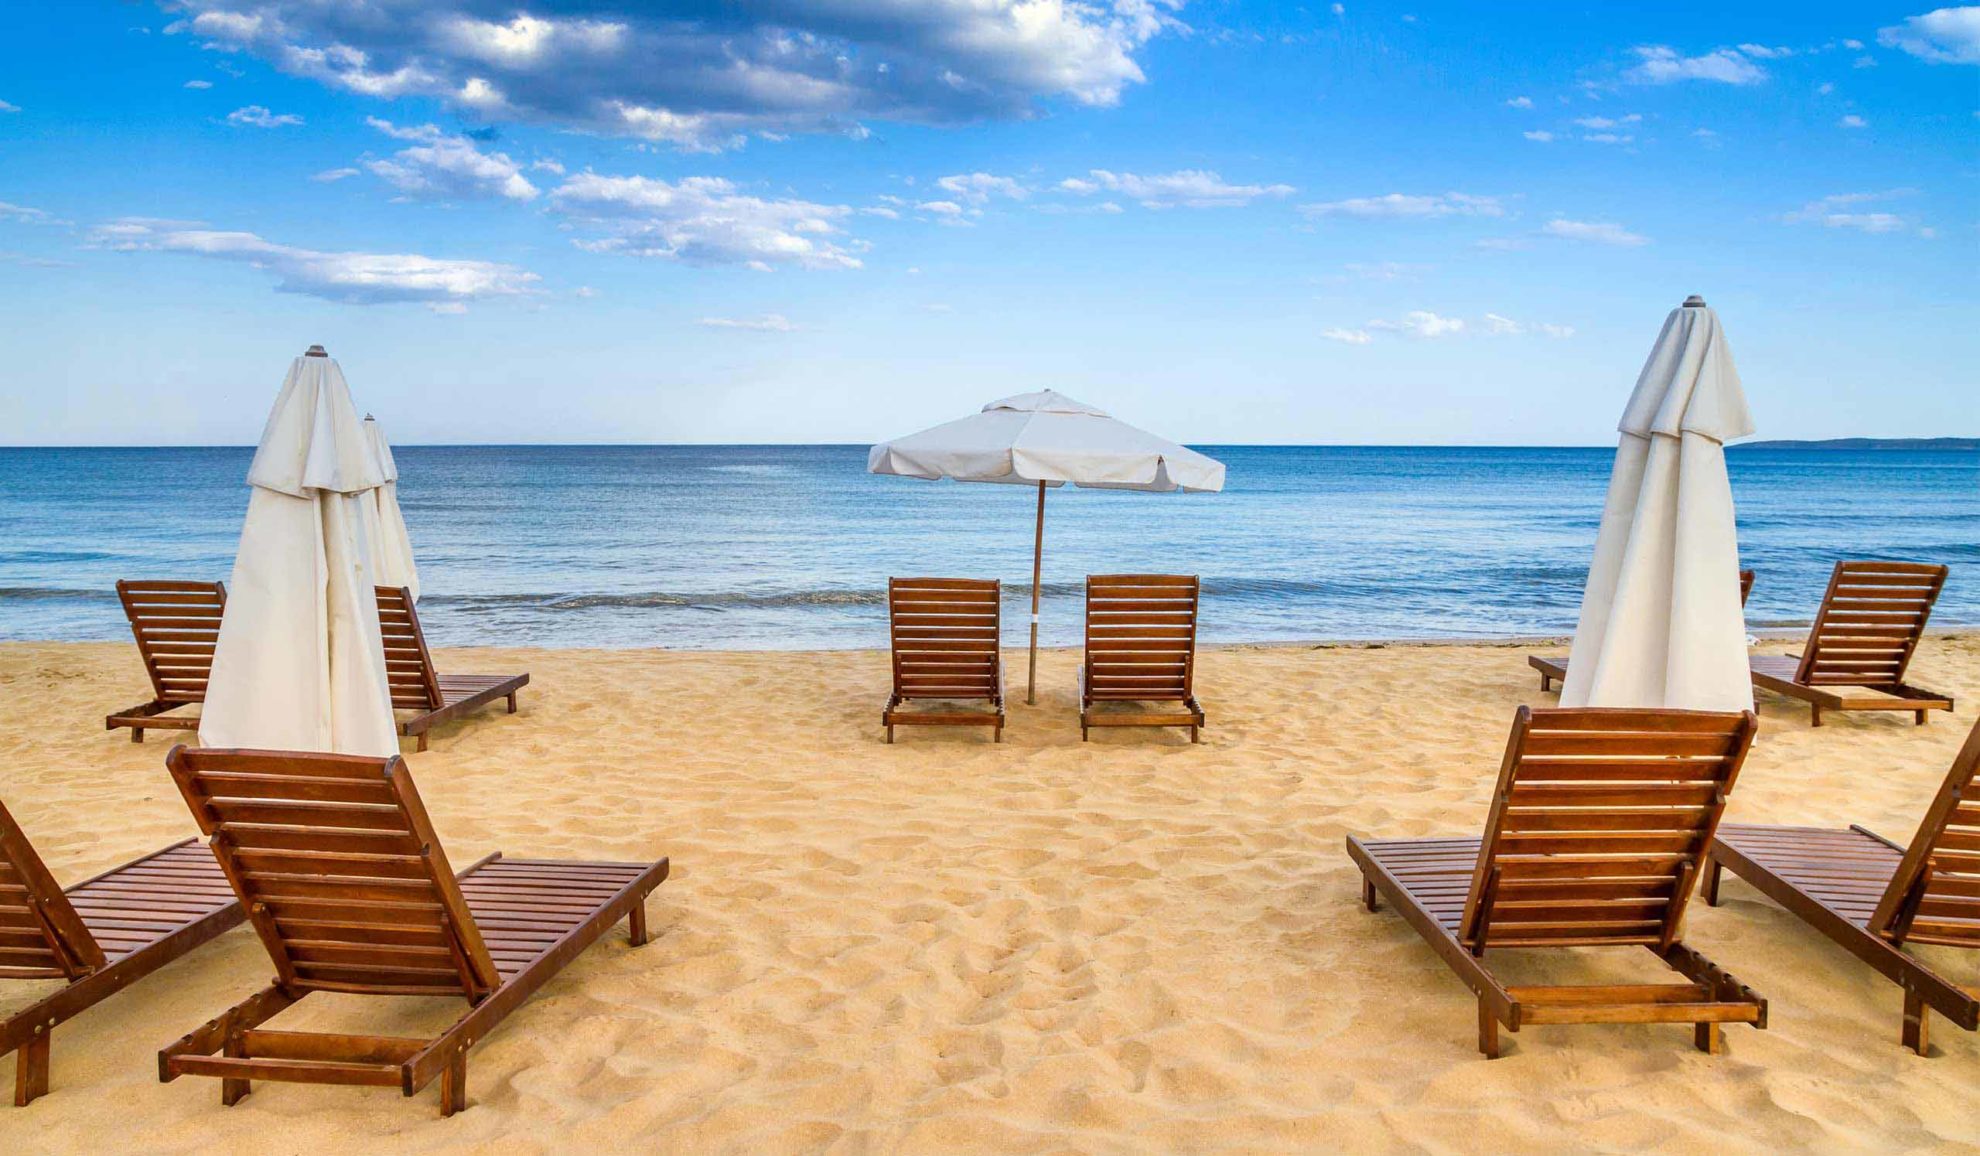 beach-umbrellas-and-deck-chairs-on-the-sandy-sea-shore-dartmouth-ma